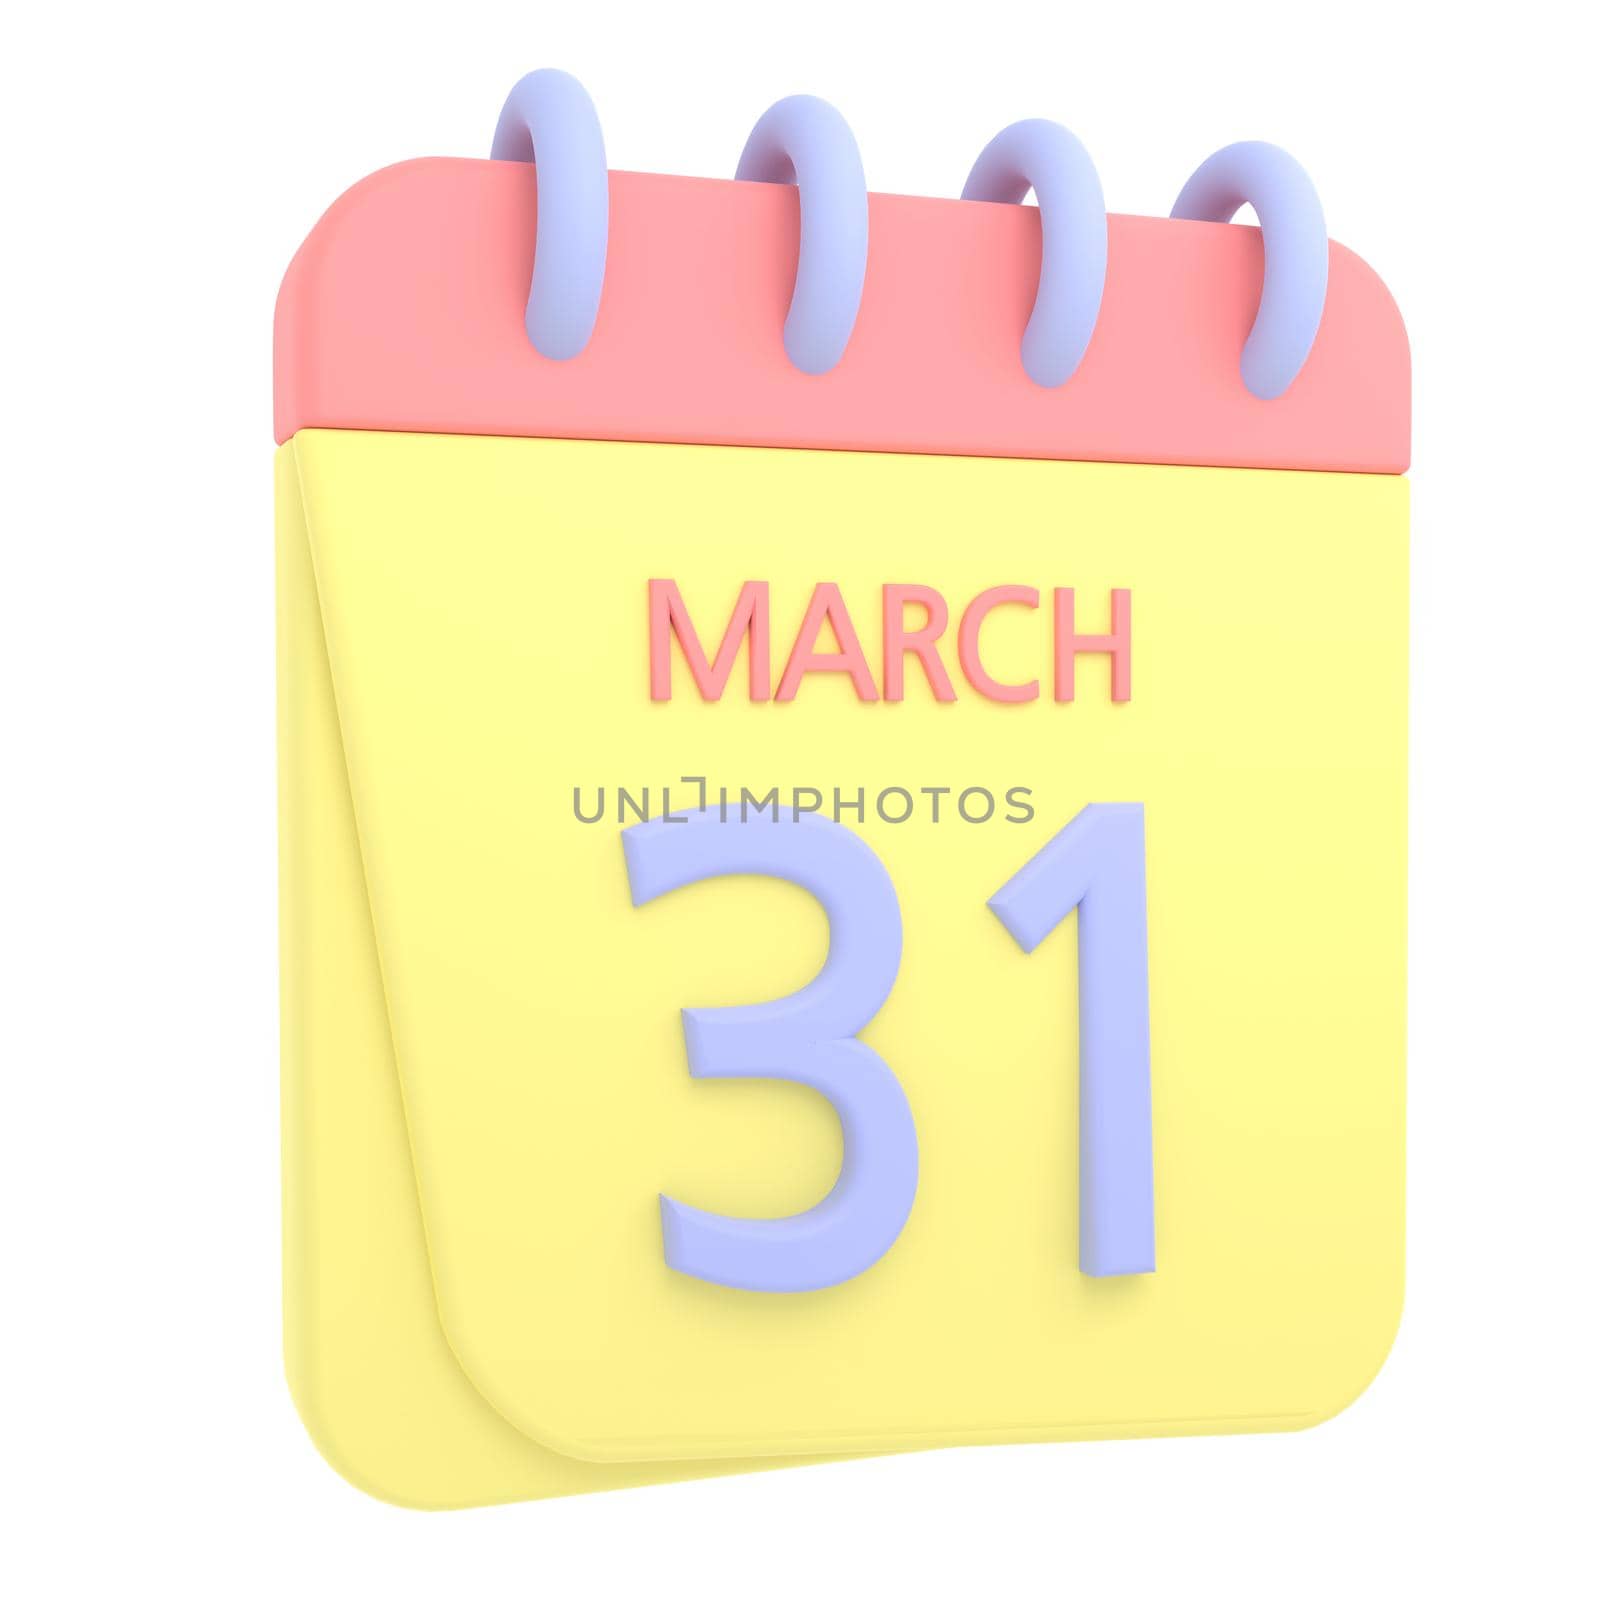 31st March 3D calendar icon by AnnaMarin